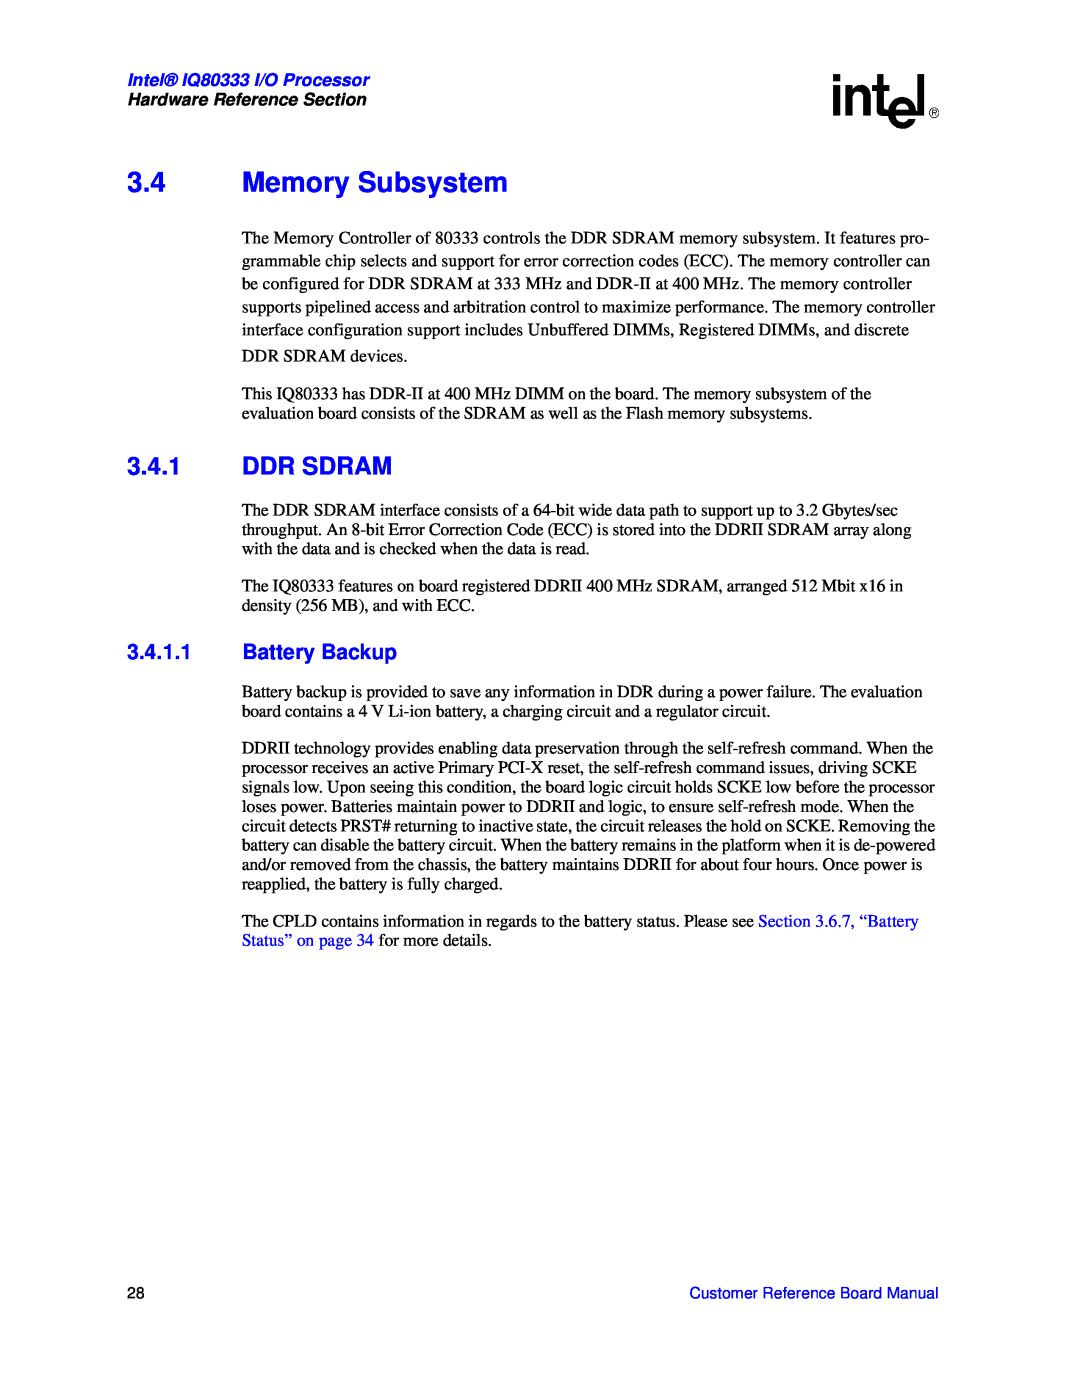 Intel manual 3.4Memory Subsystem, 3.4.1DDR SDRAM, 3.4.1.1Battery Backup, Intel IQ80333 I/O Processor 